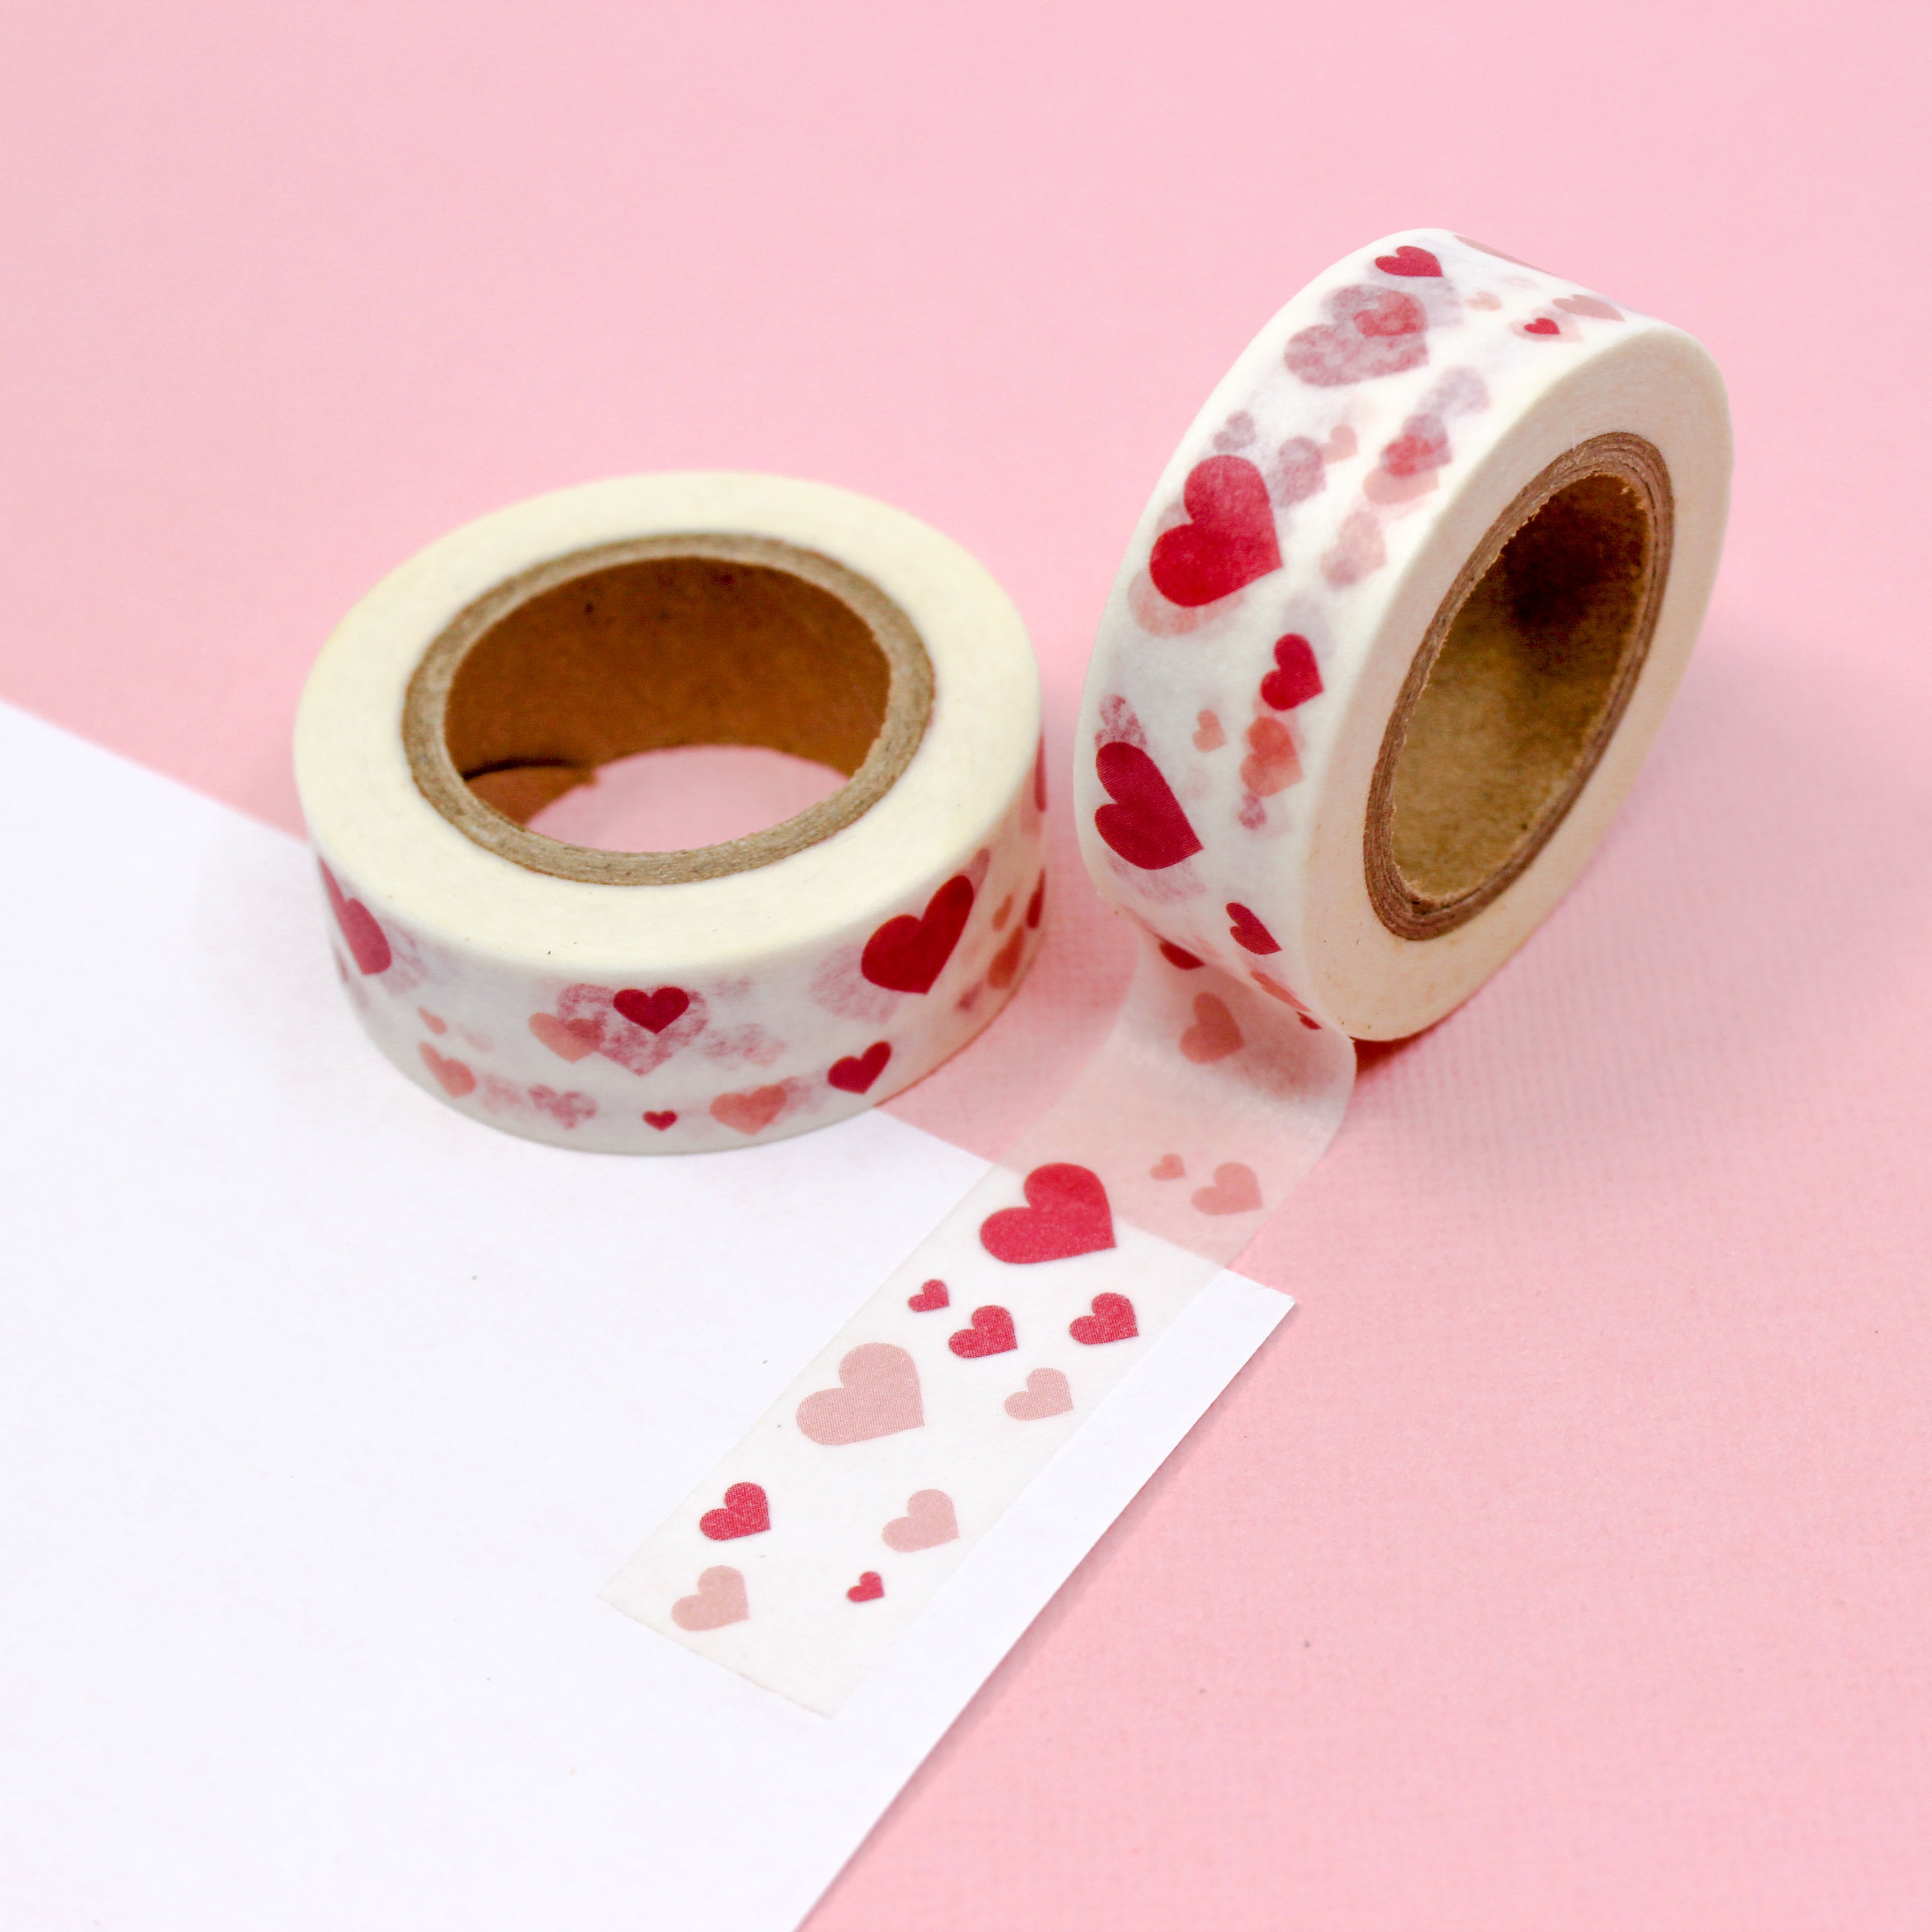 Valentines Day Washi Tape,heart Washi Tape,valentine Washi Tape